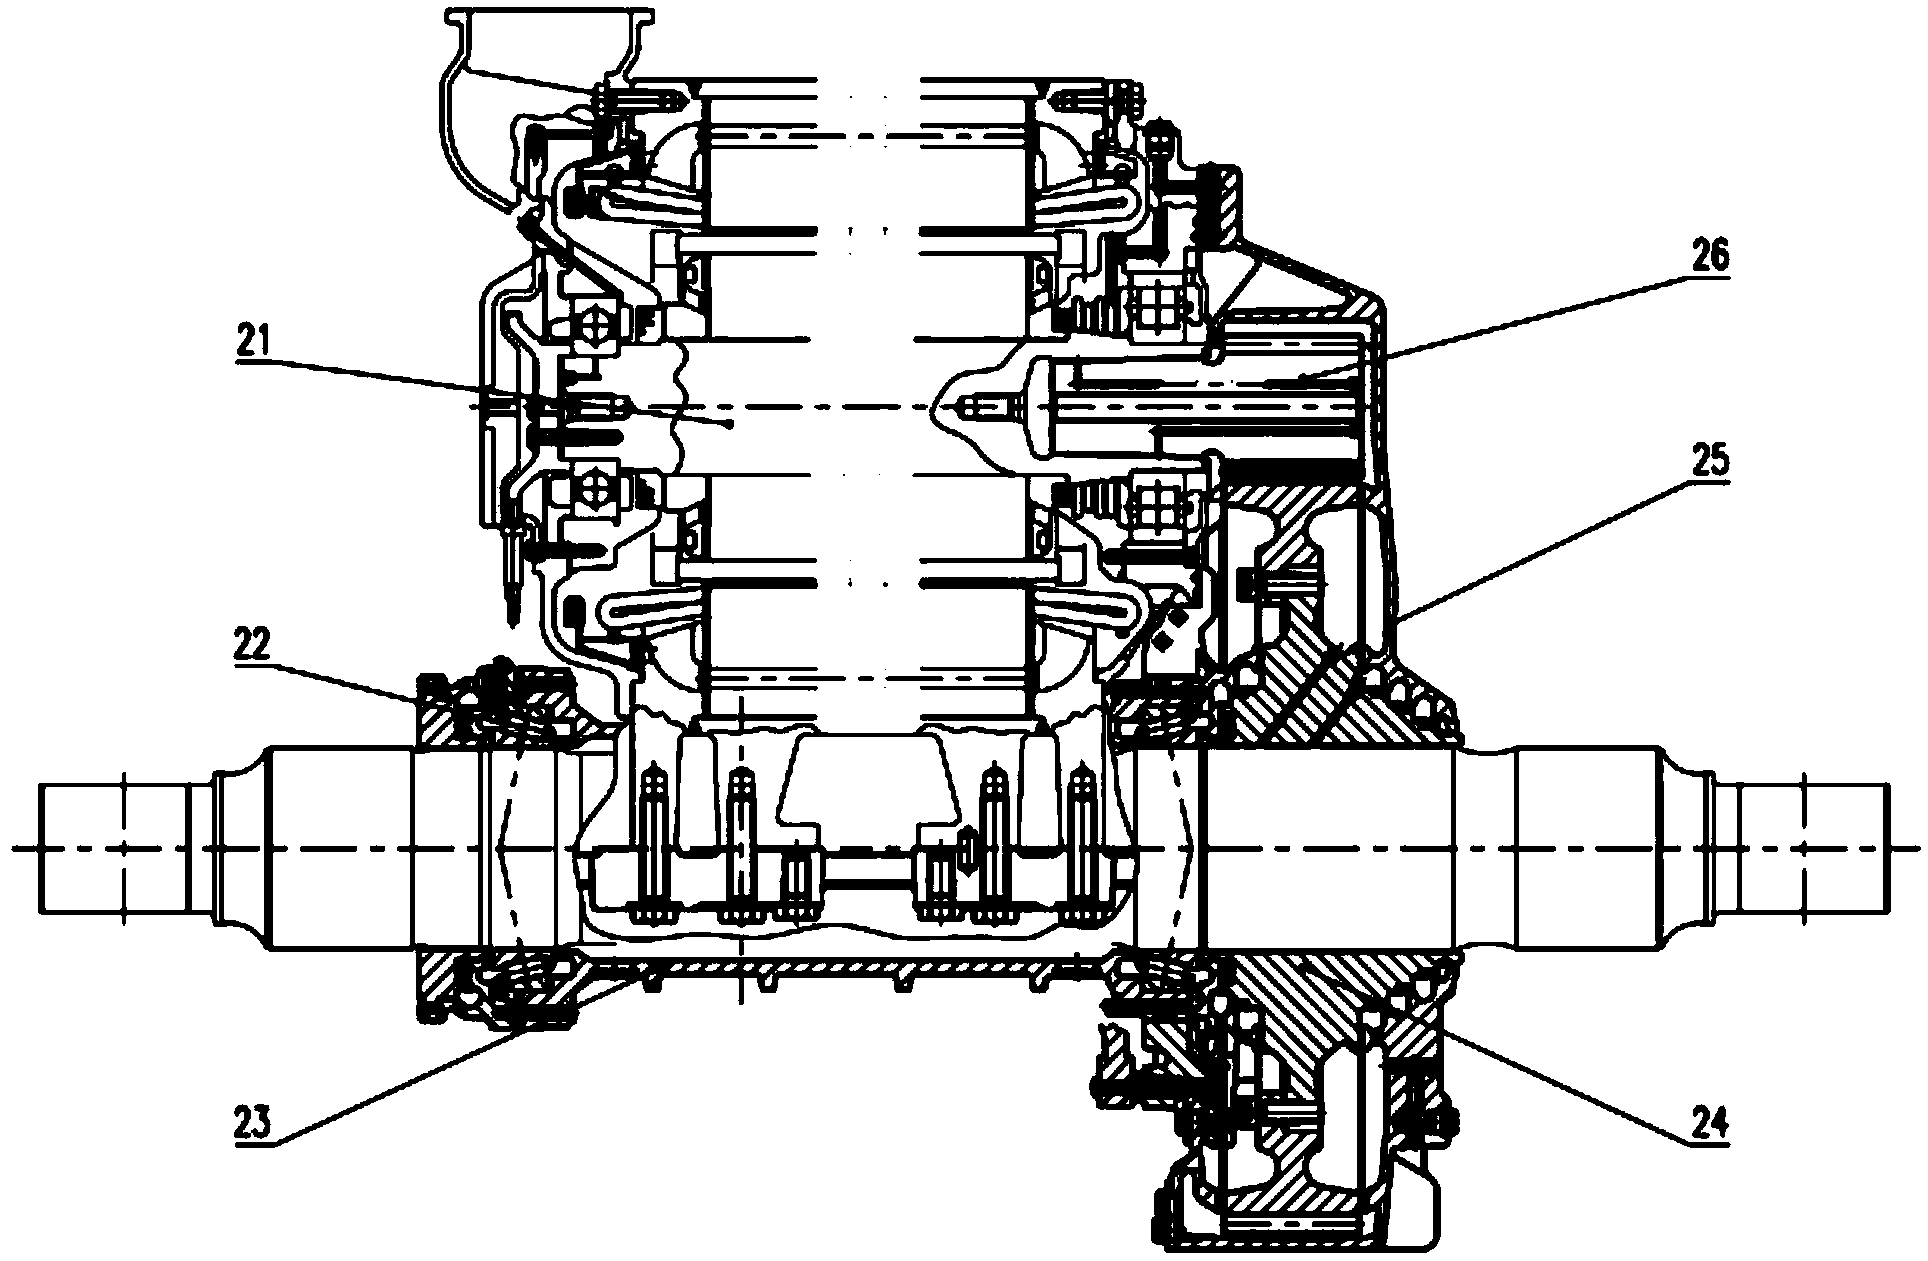 Locomotive three-axis radial bogie